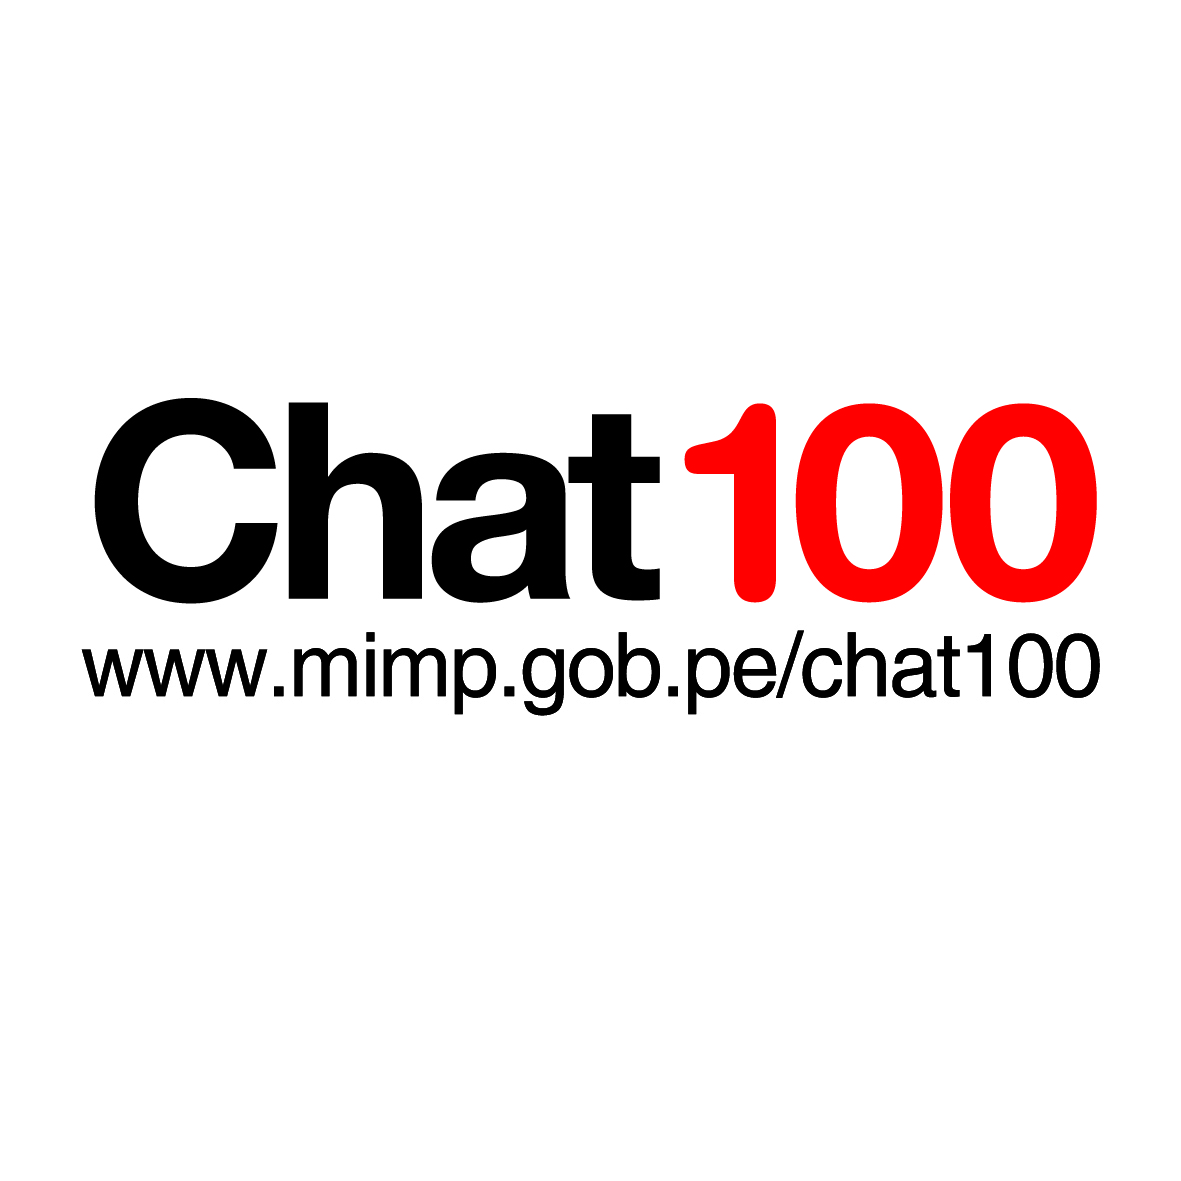 Logo chat 100 2019 01